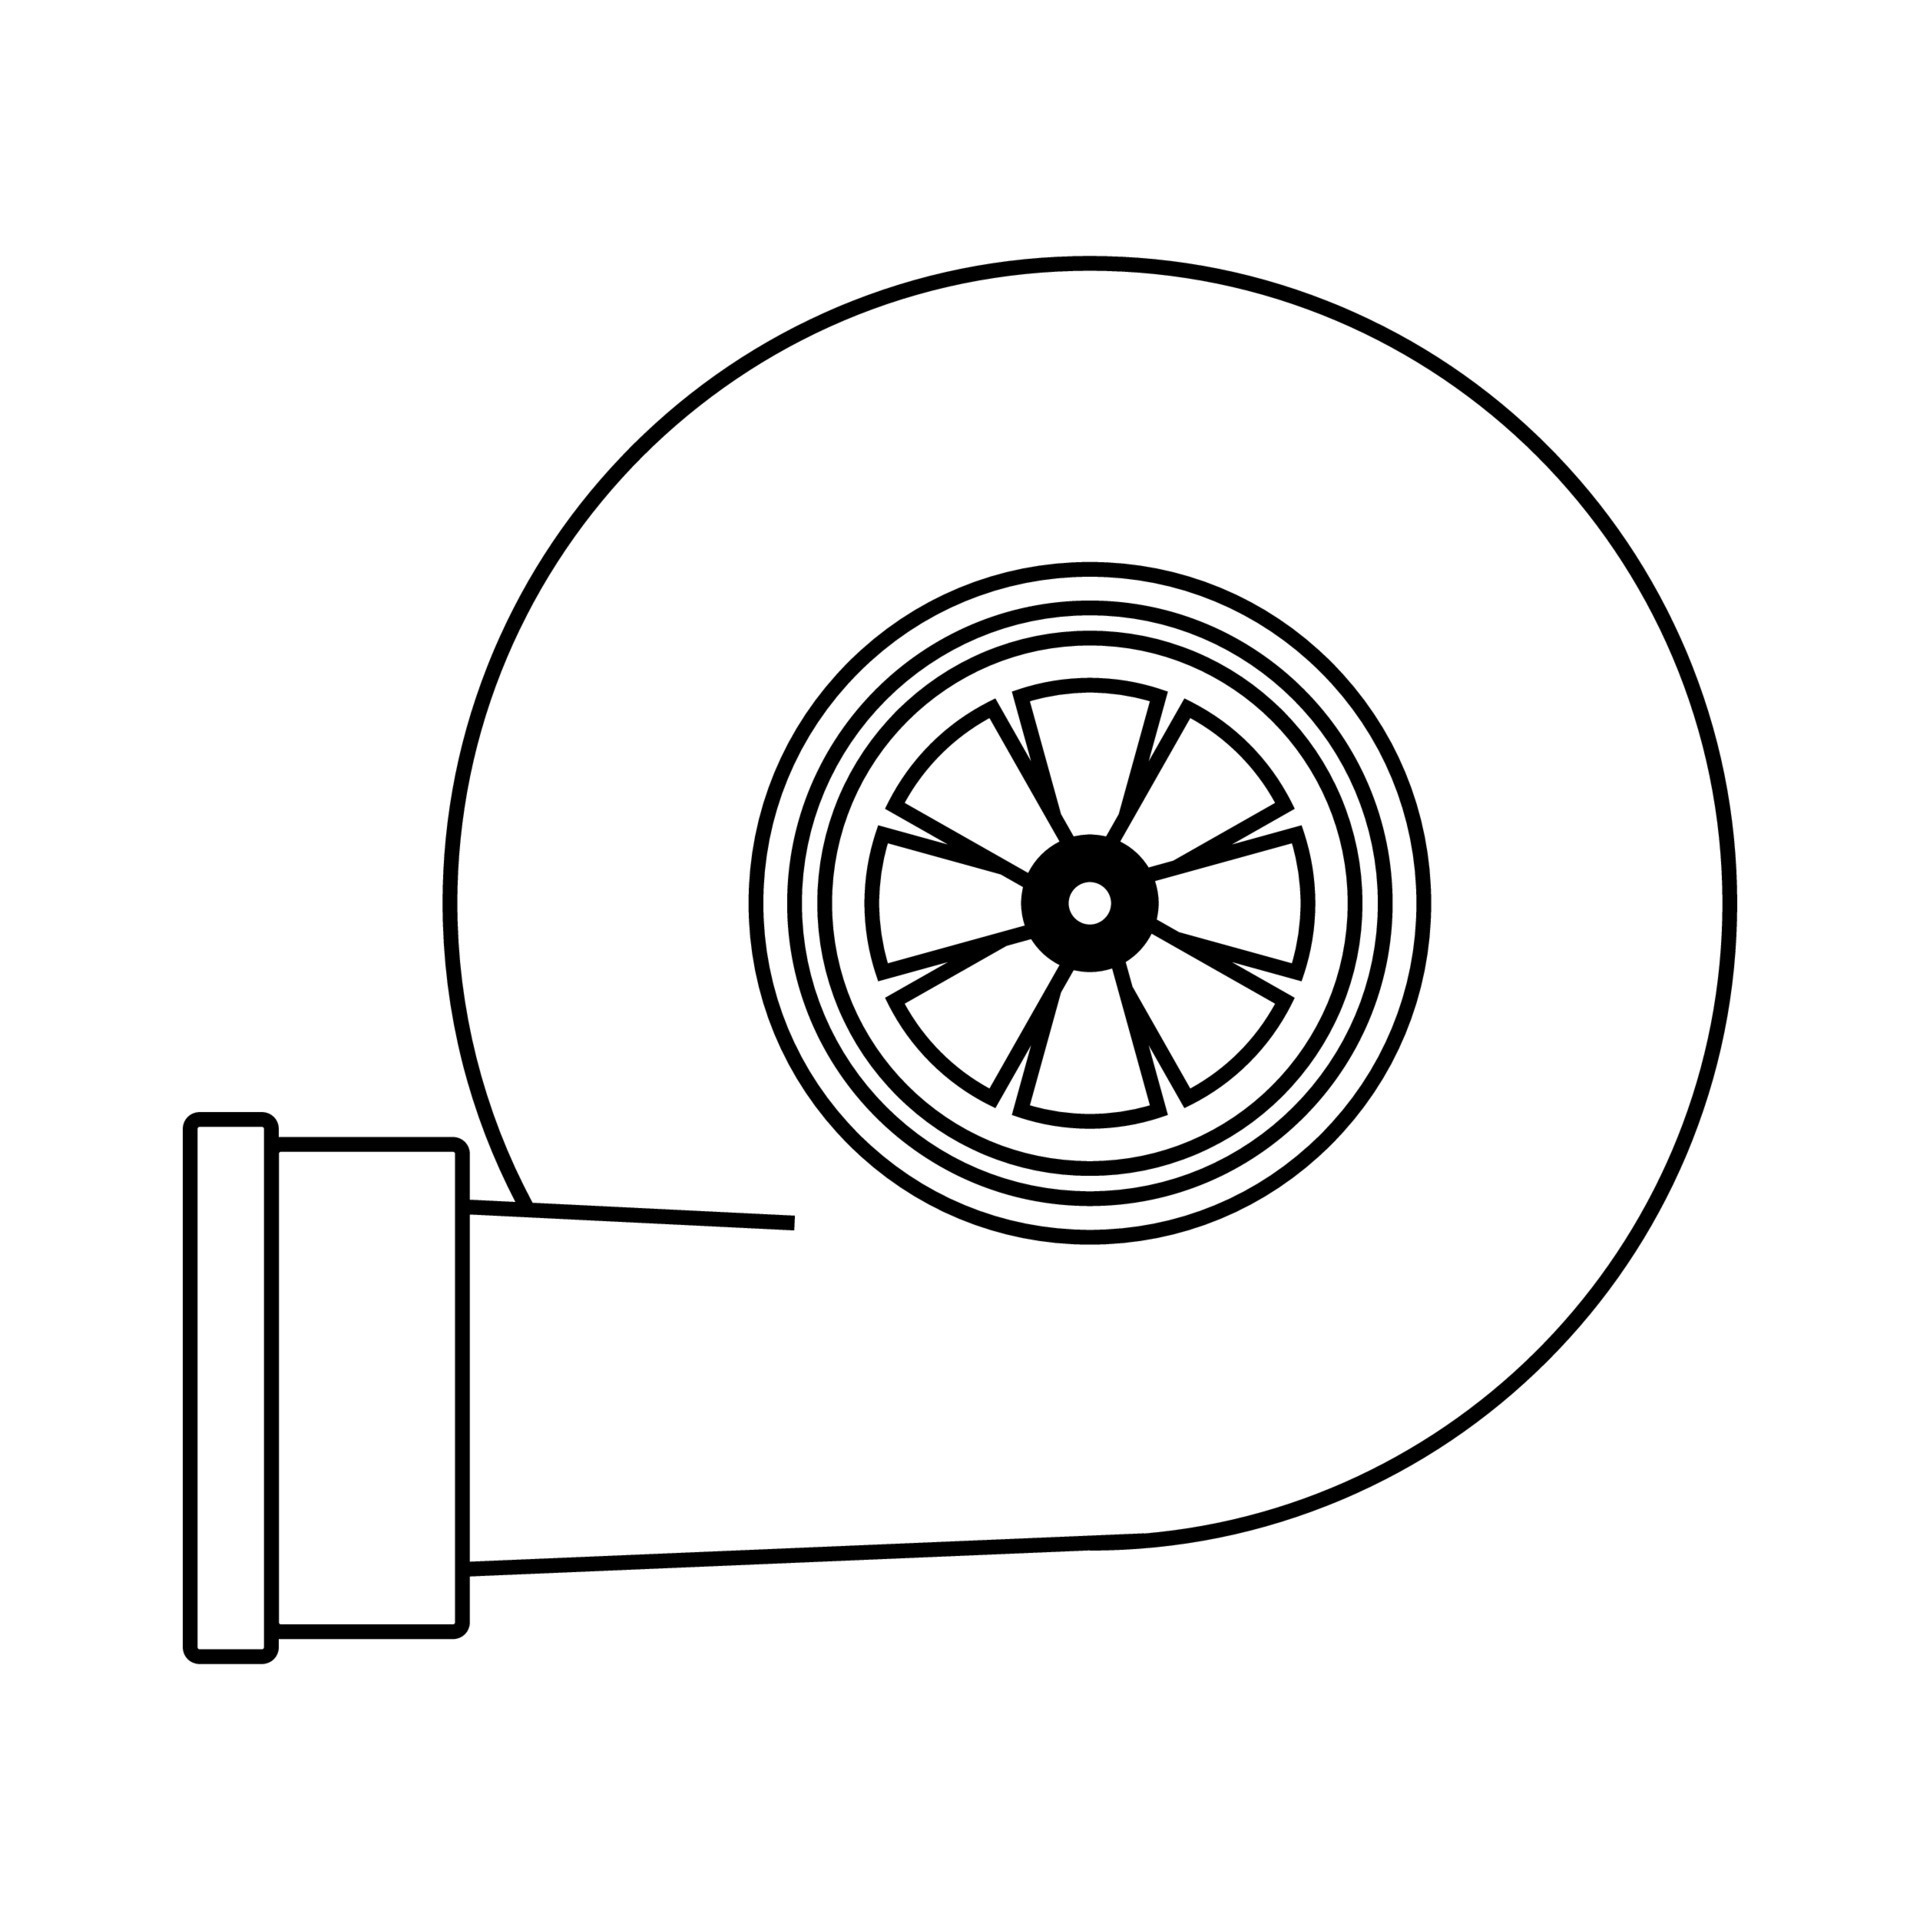 Turbine from automobile engine. Line illustration of car motor